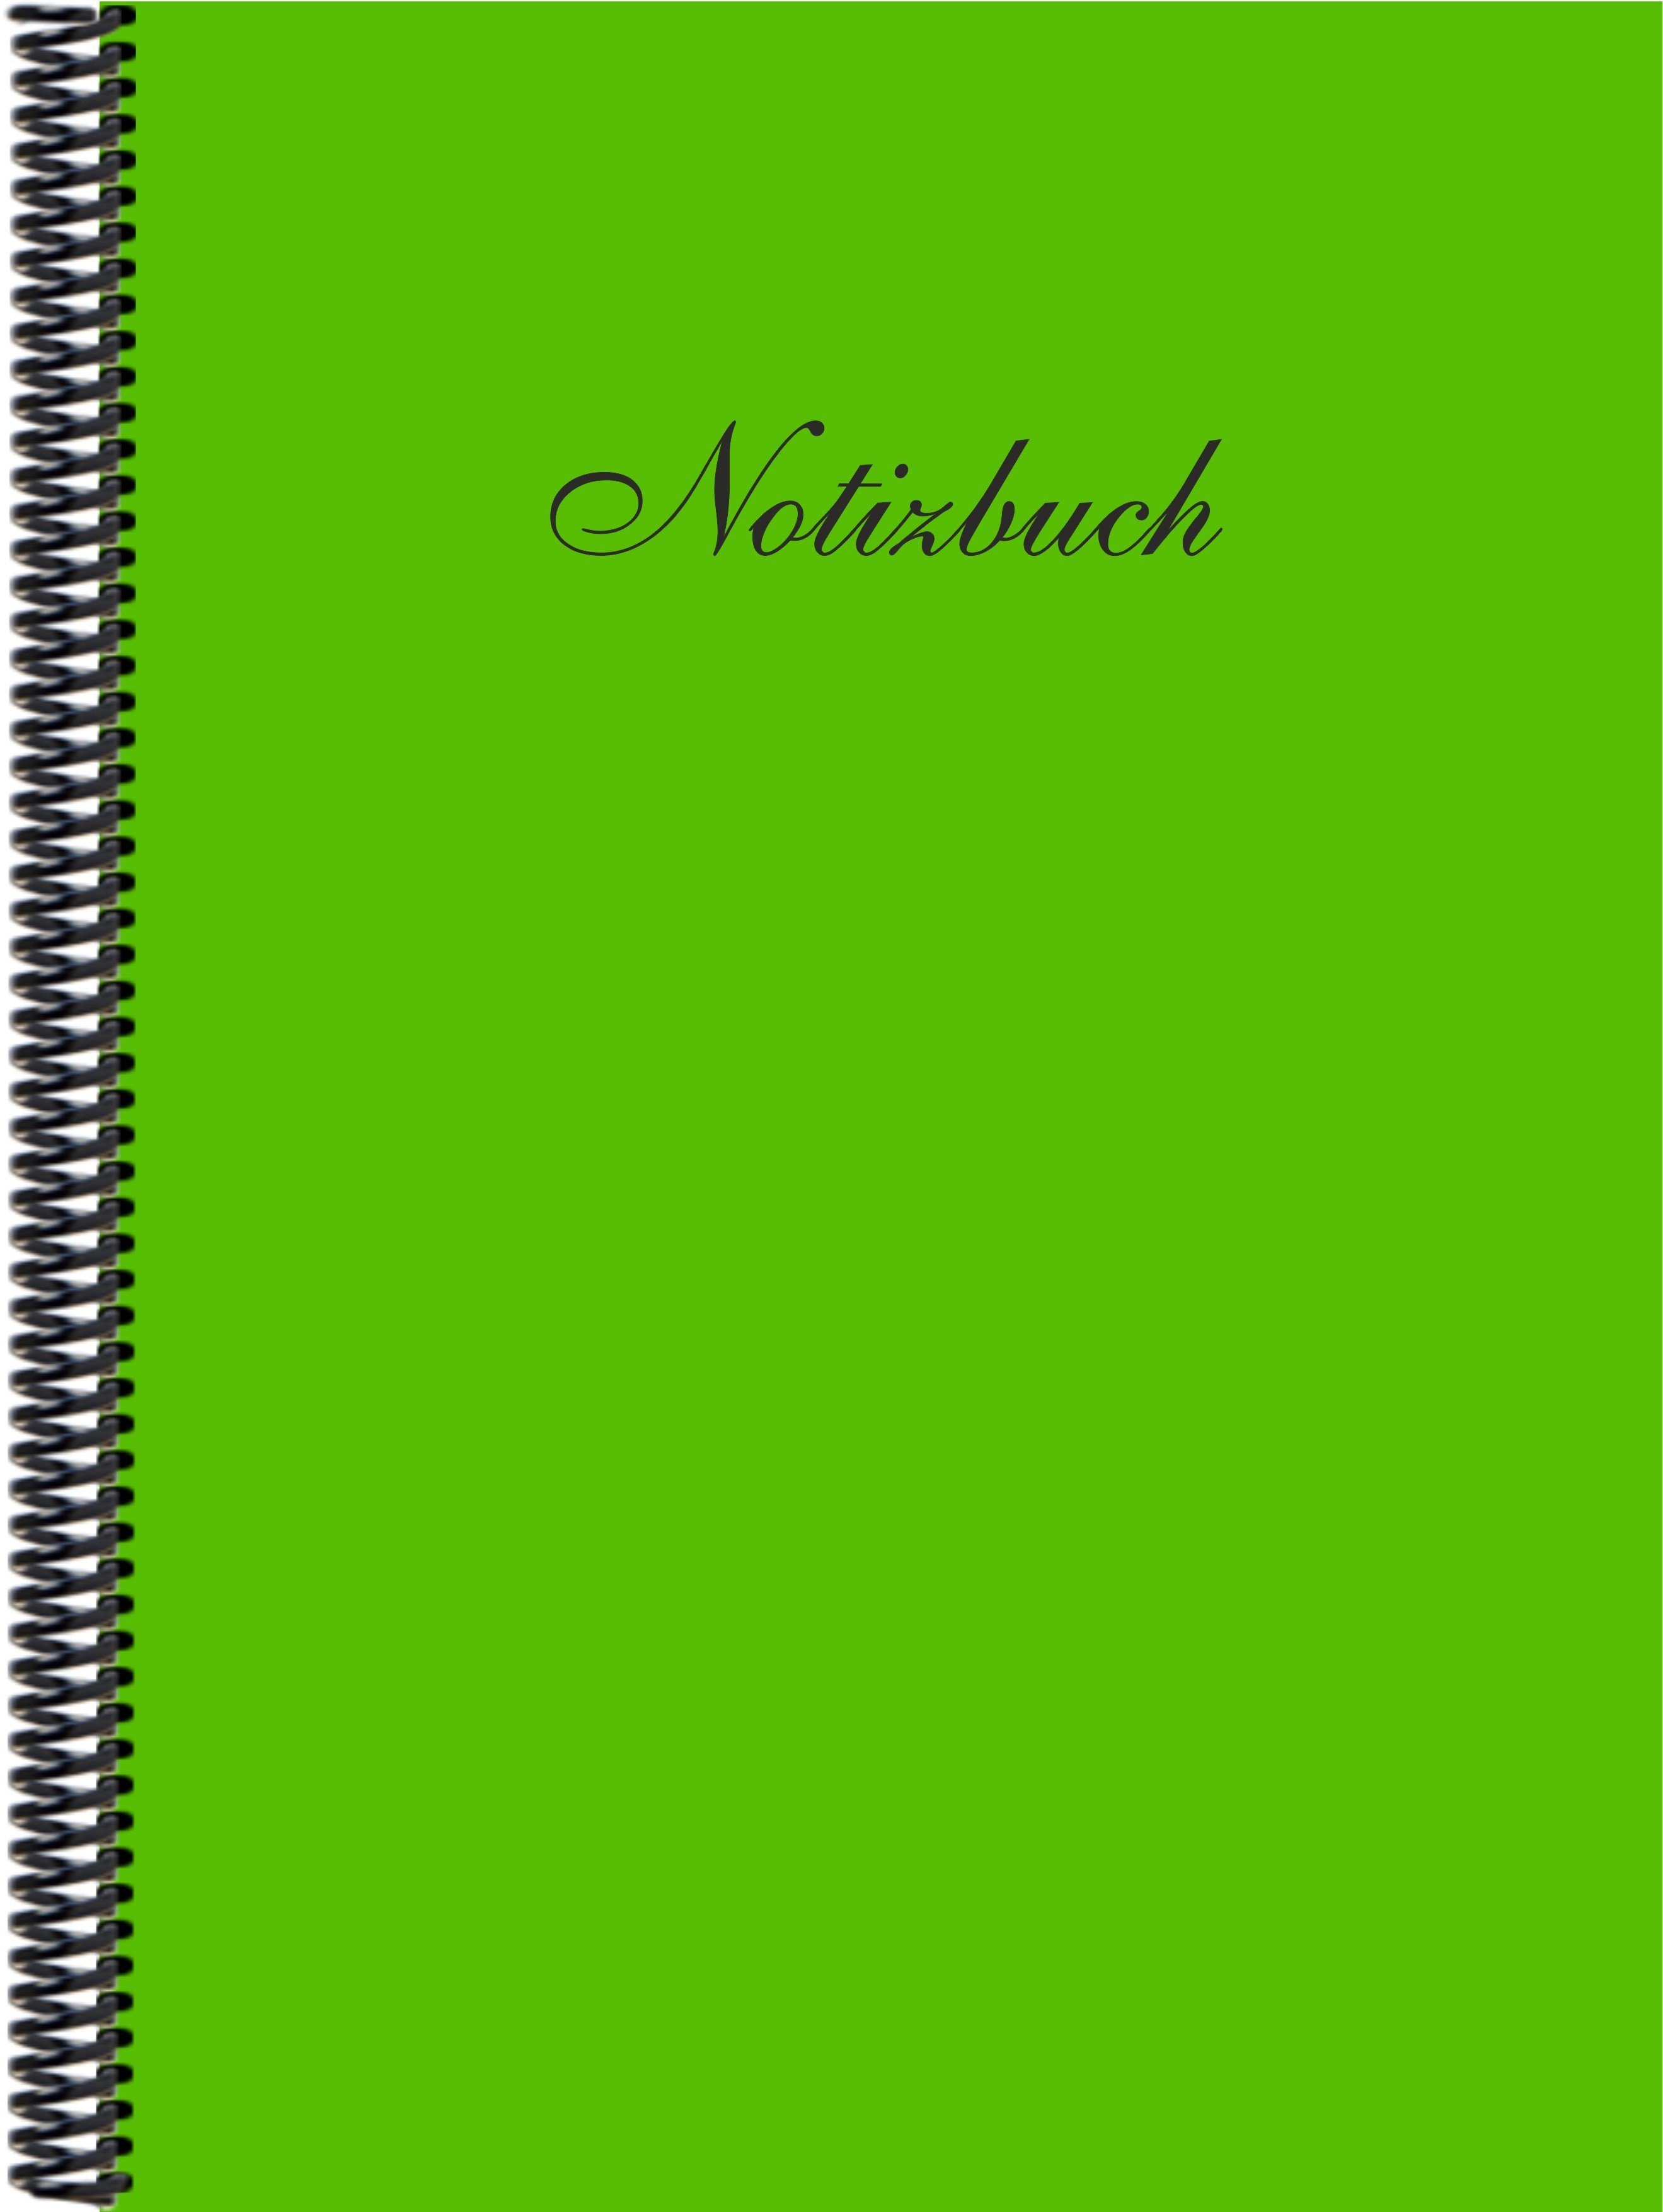 blanko, grasgrün Notizbuch Verlag der DINA4 Gmbh E&Z Notizbuch Trendfarbe in